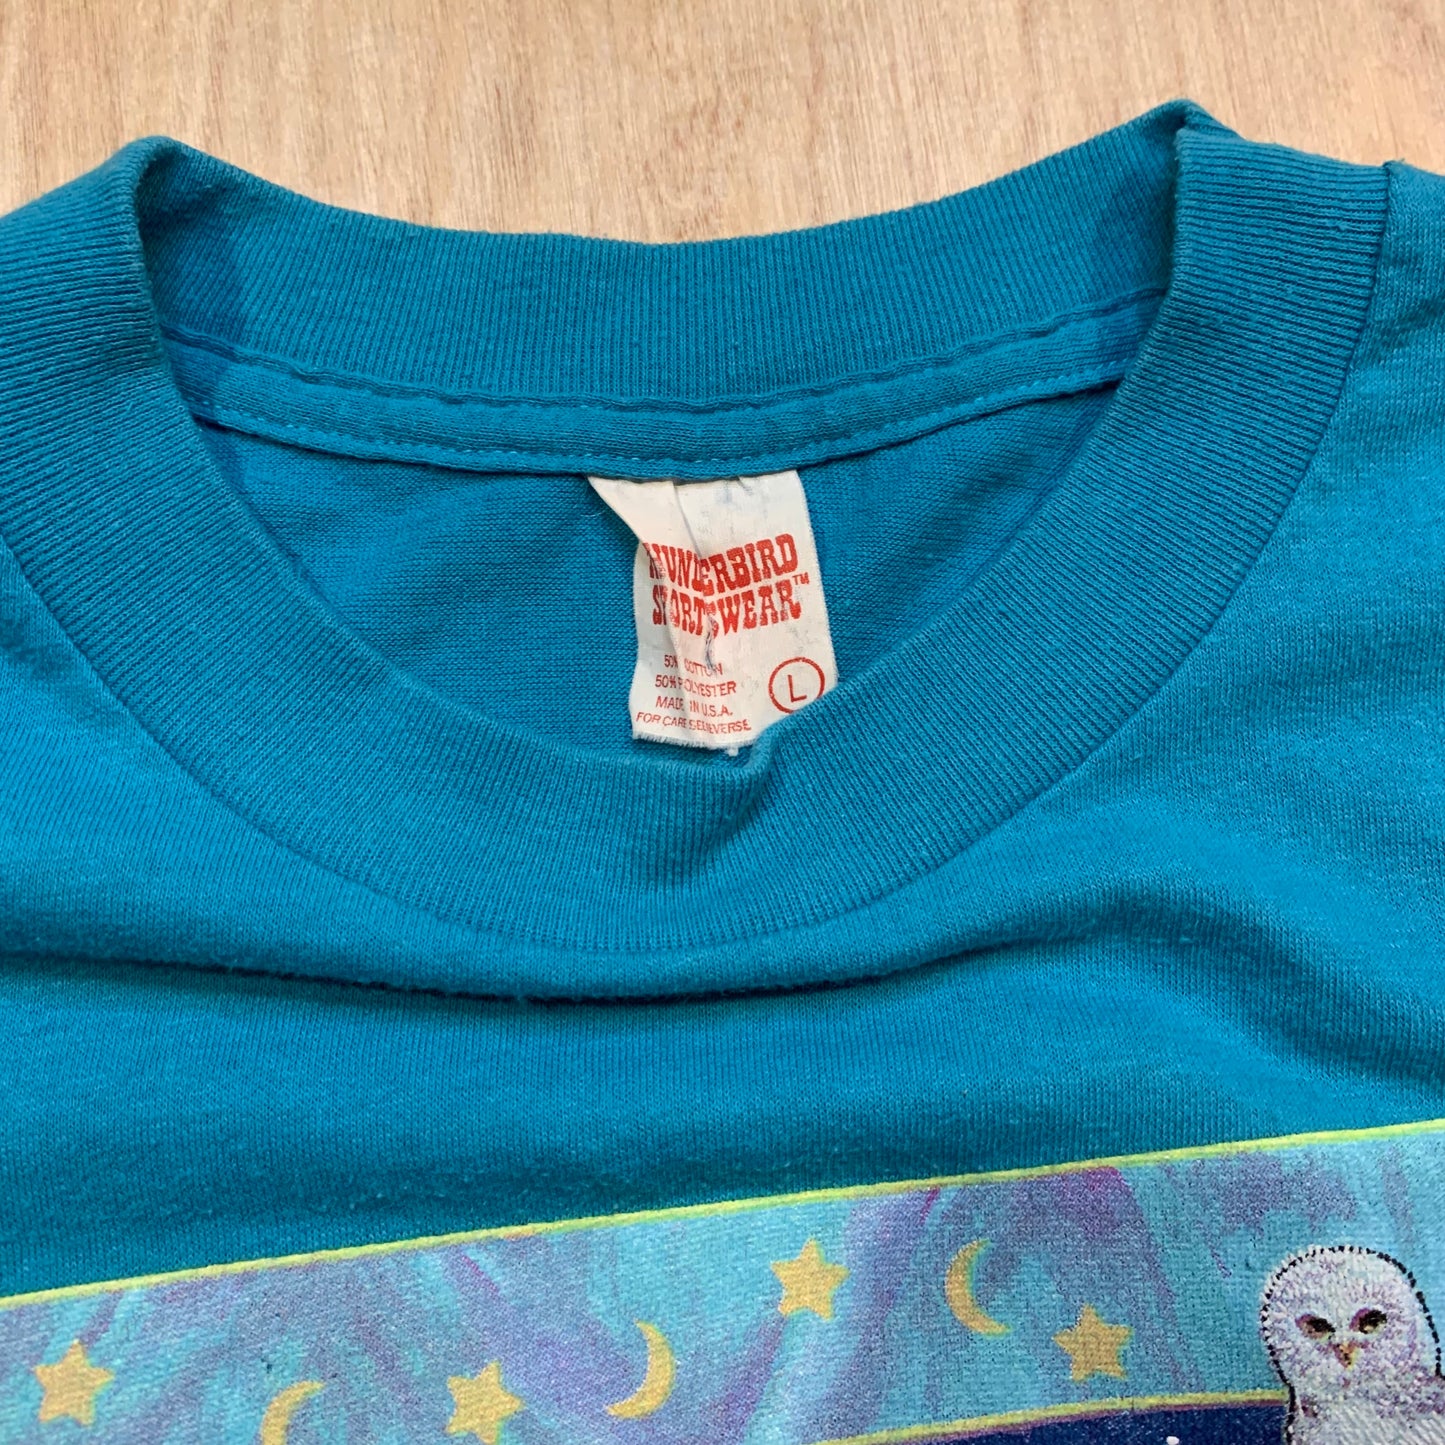 Vintage Single Stitch Alaska Wildlife T-Shirt